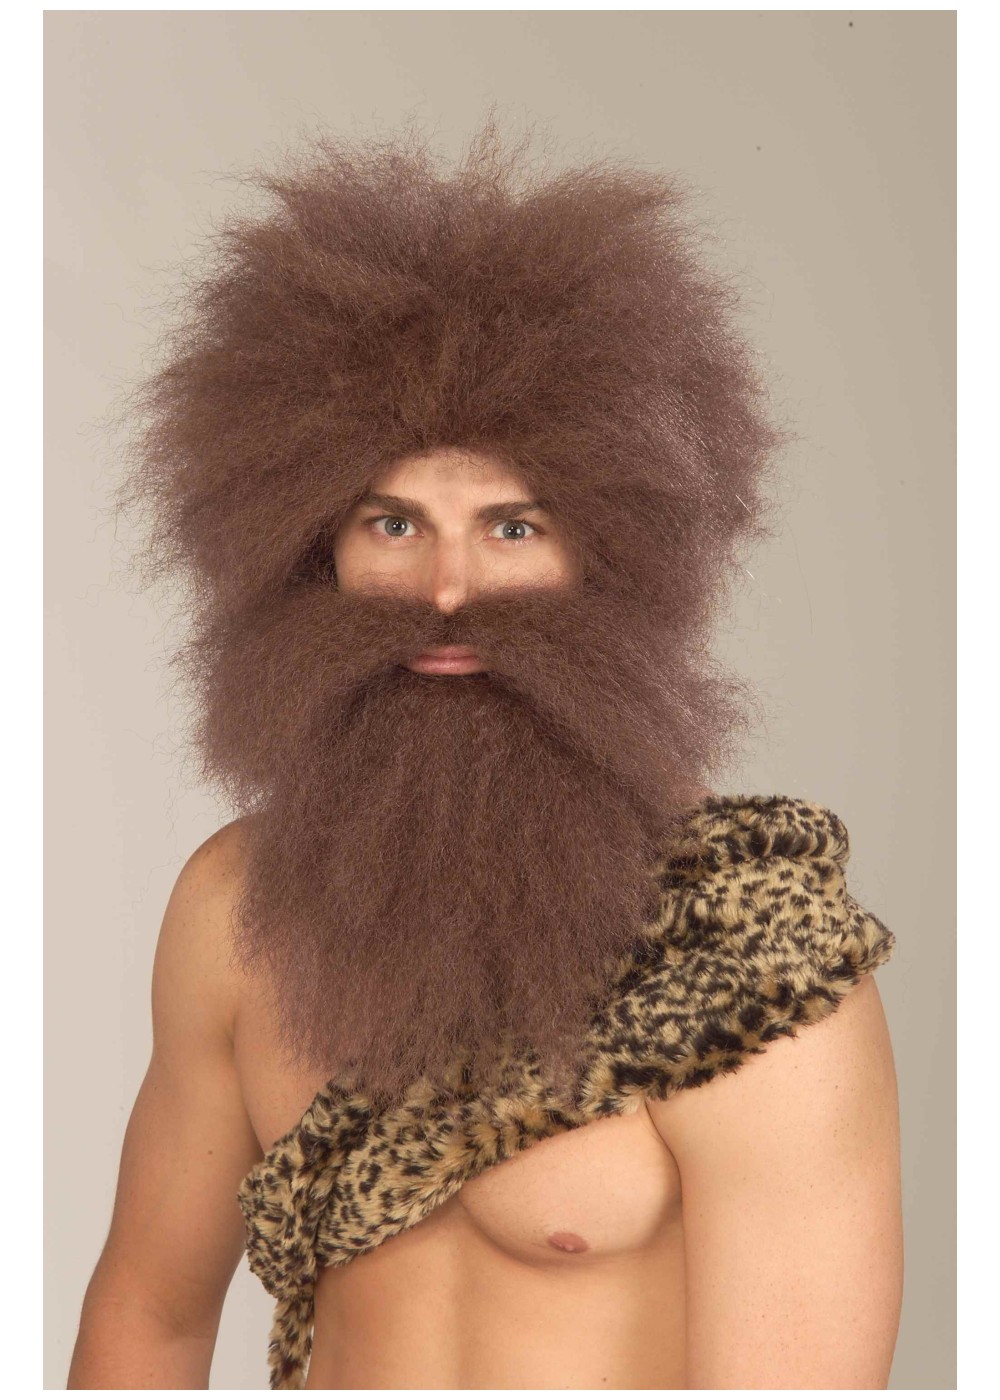 Caveman Wig And Beard Costume Kit